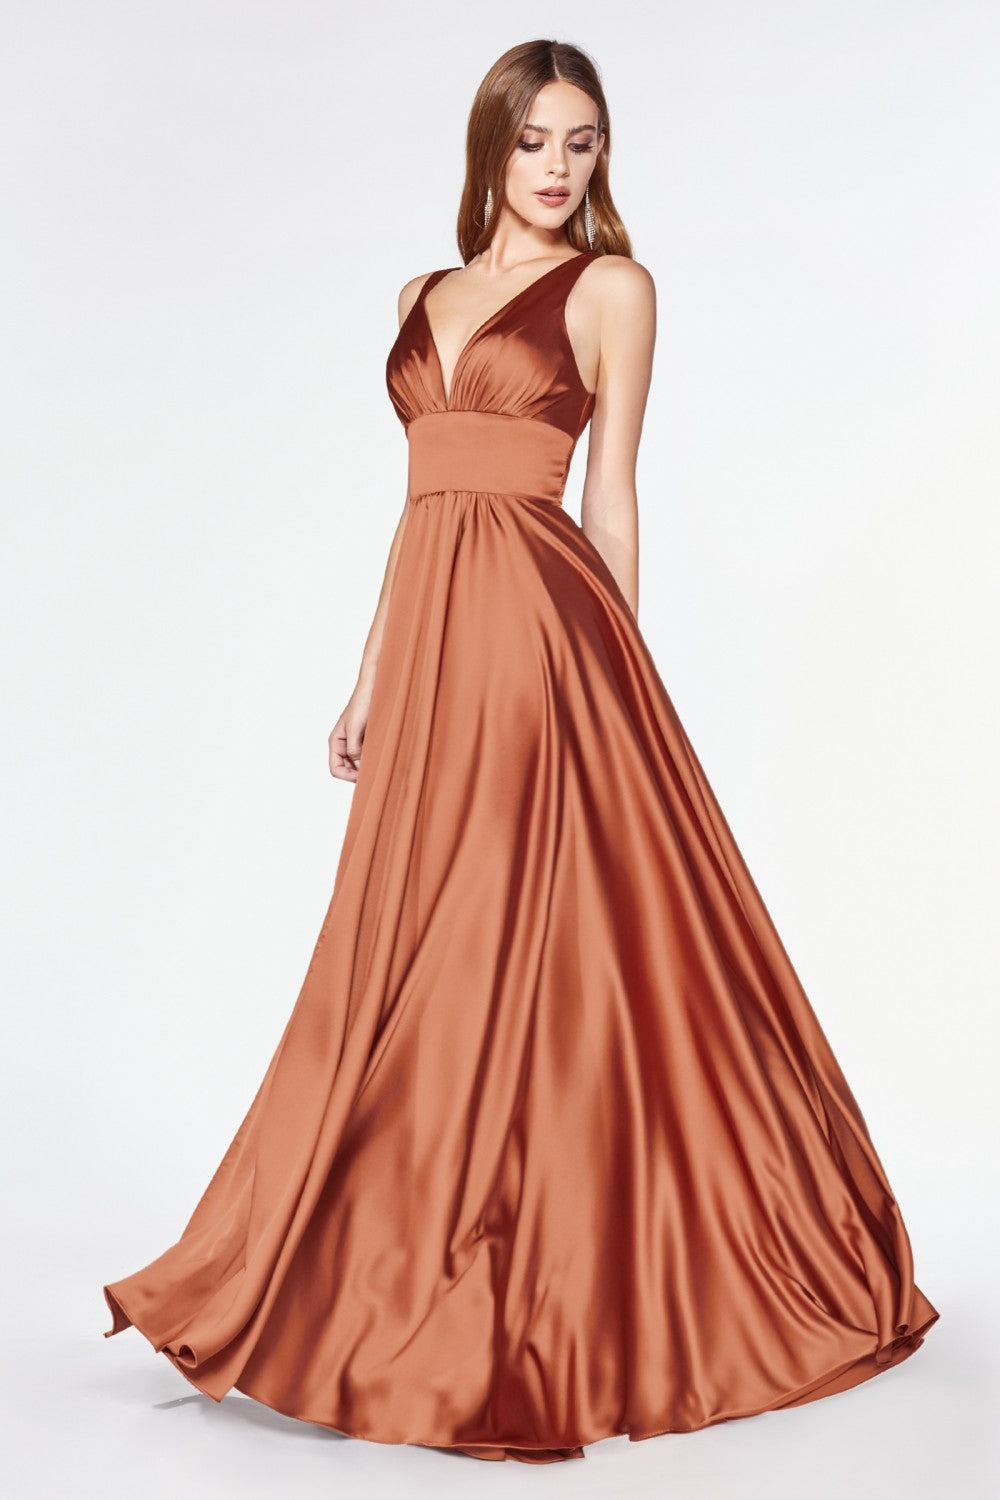 CD 7469 B - A-Line Satin Prom Gown with Pleated V-Neck Bodice Spaghetti Straps & Leg Slit Prom Dress Cinderella Divine 14 SIENNA 